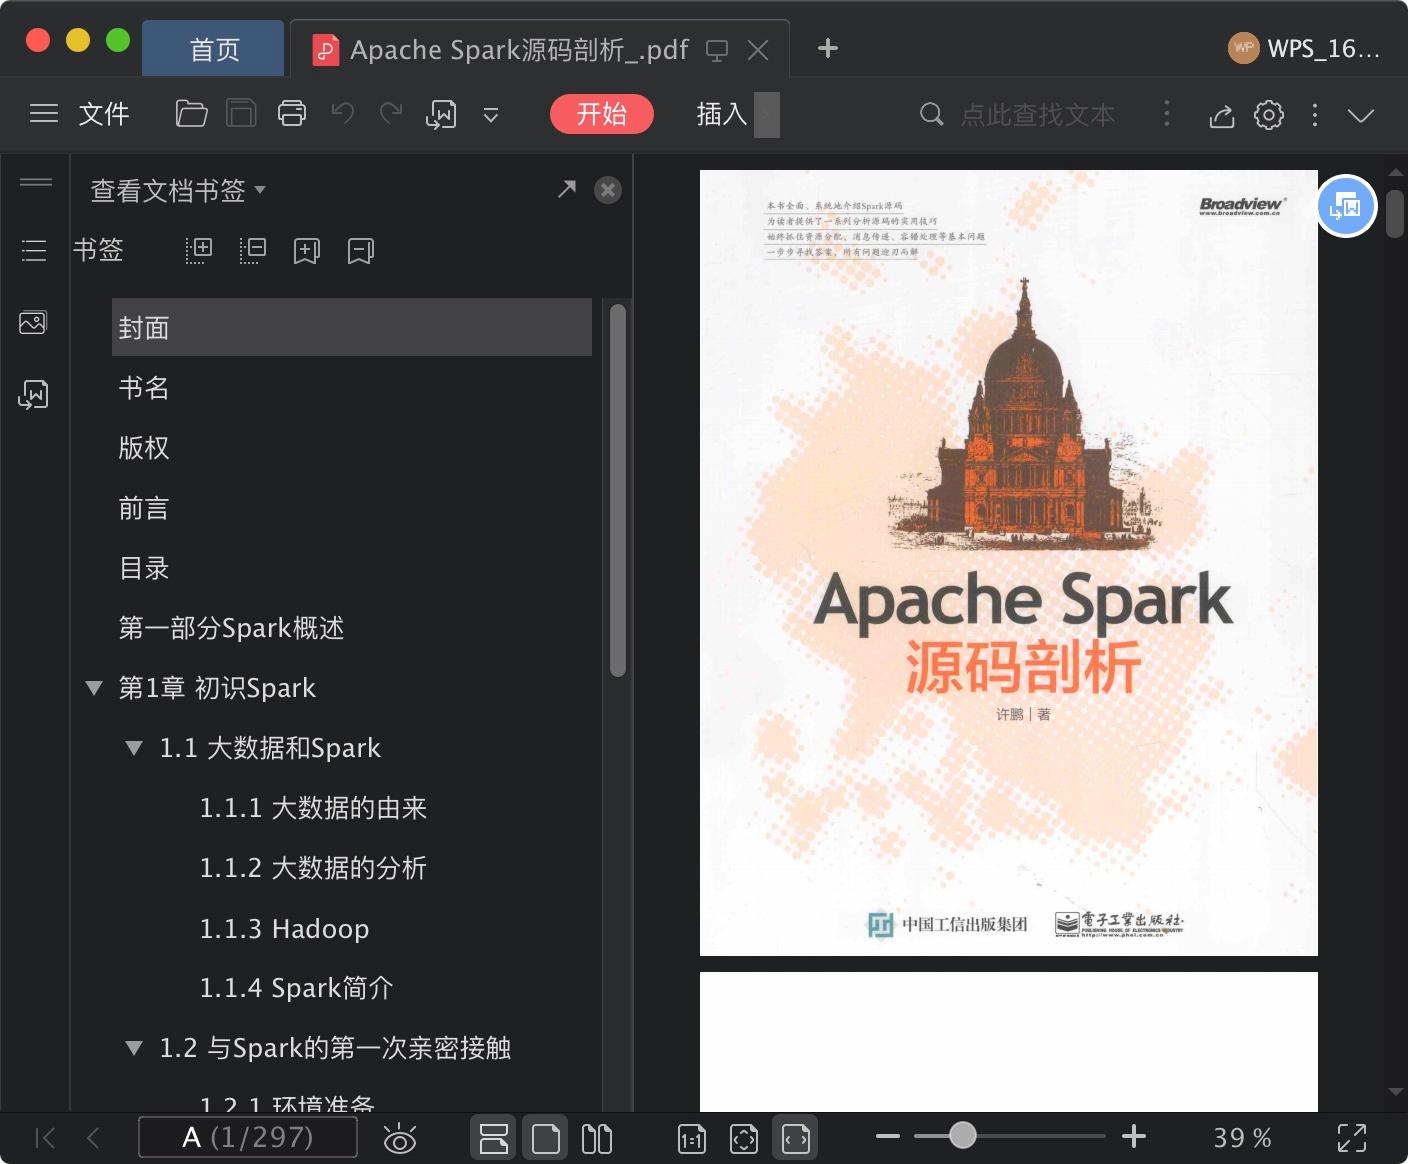 Apache Spark源码剖析pdf电子书籍下载百度网盘